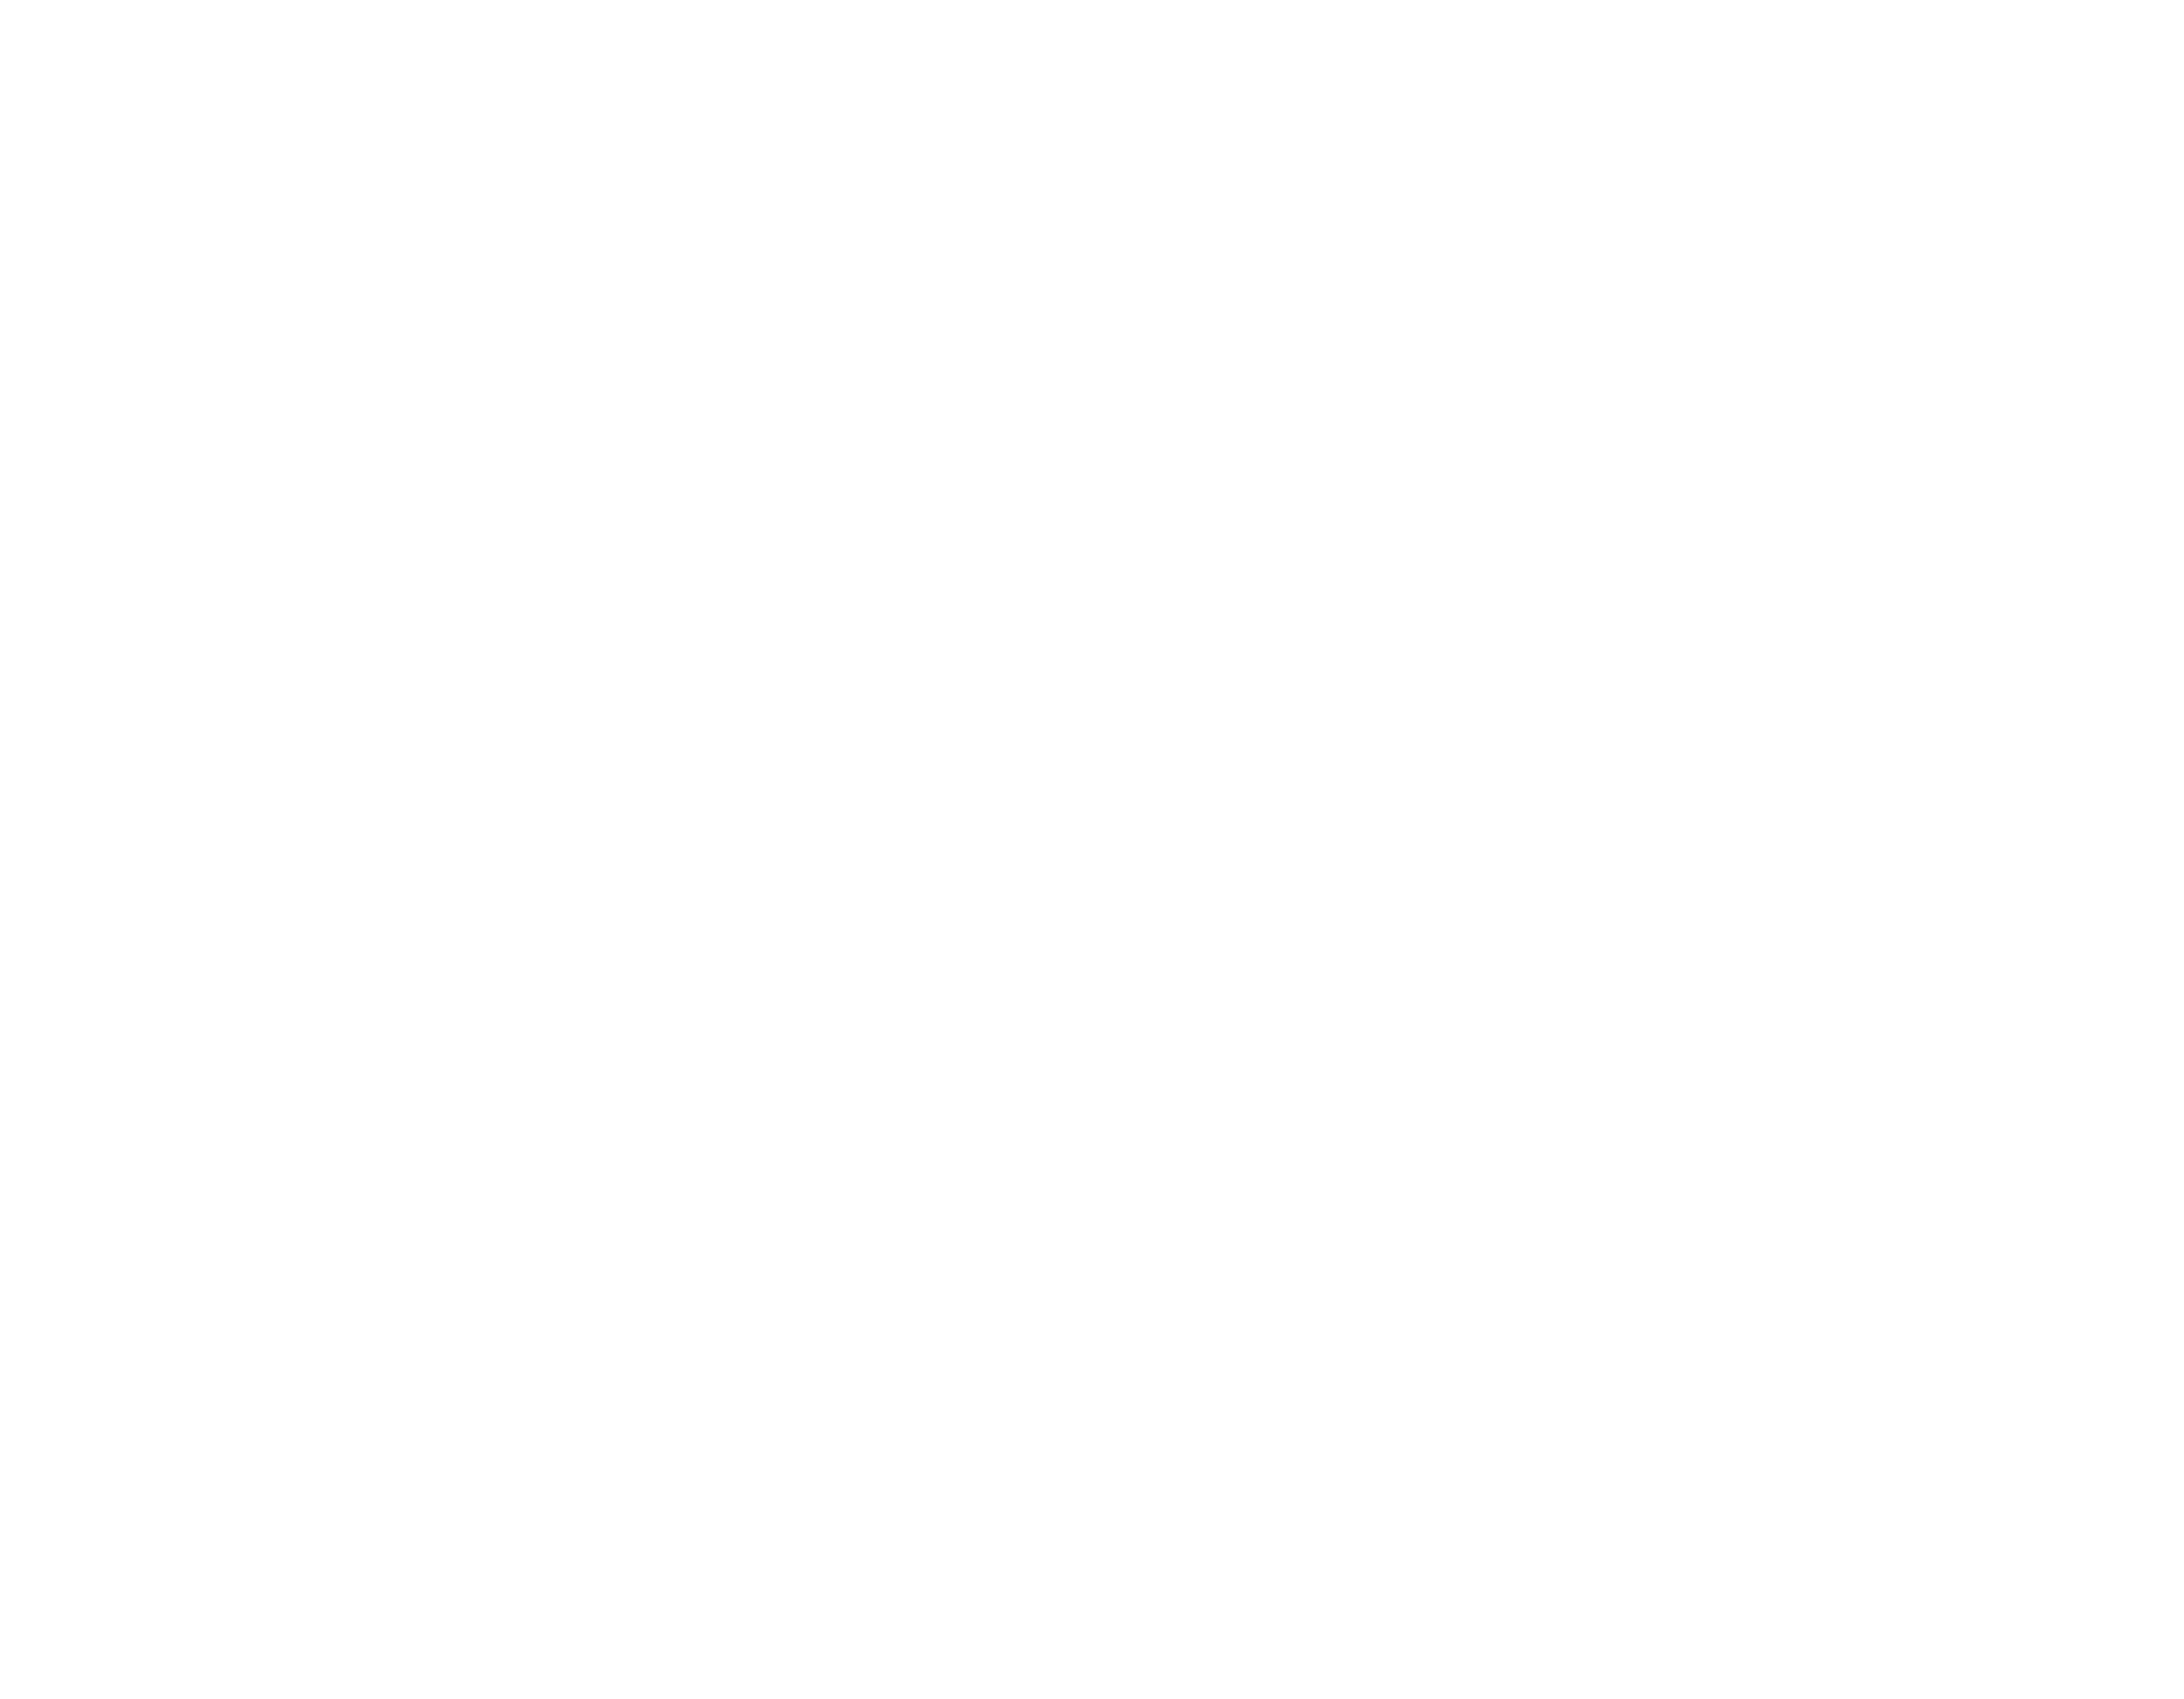 Unreal Engine Logo Transparent White.png